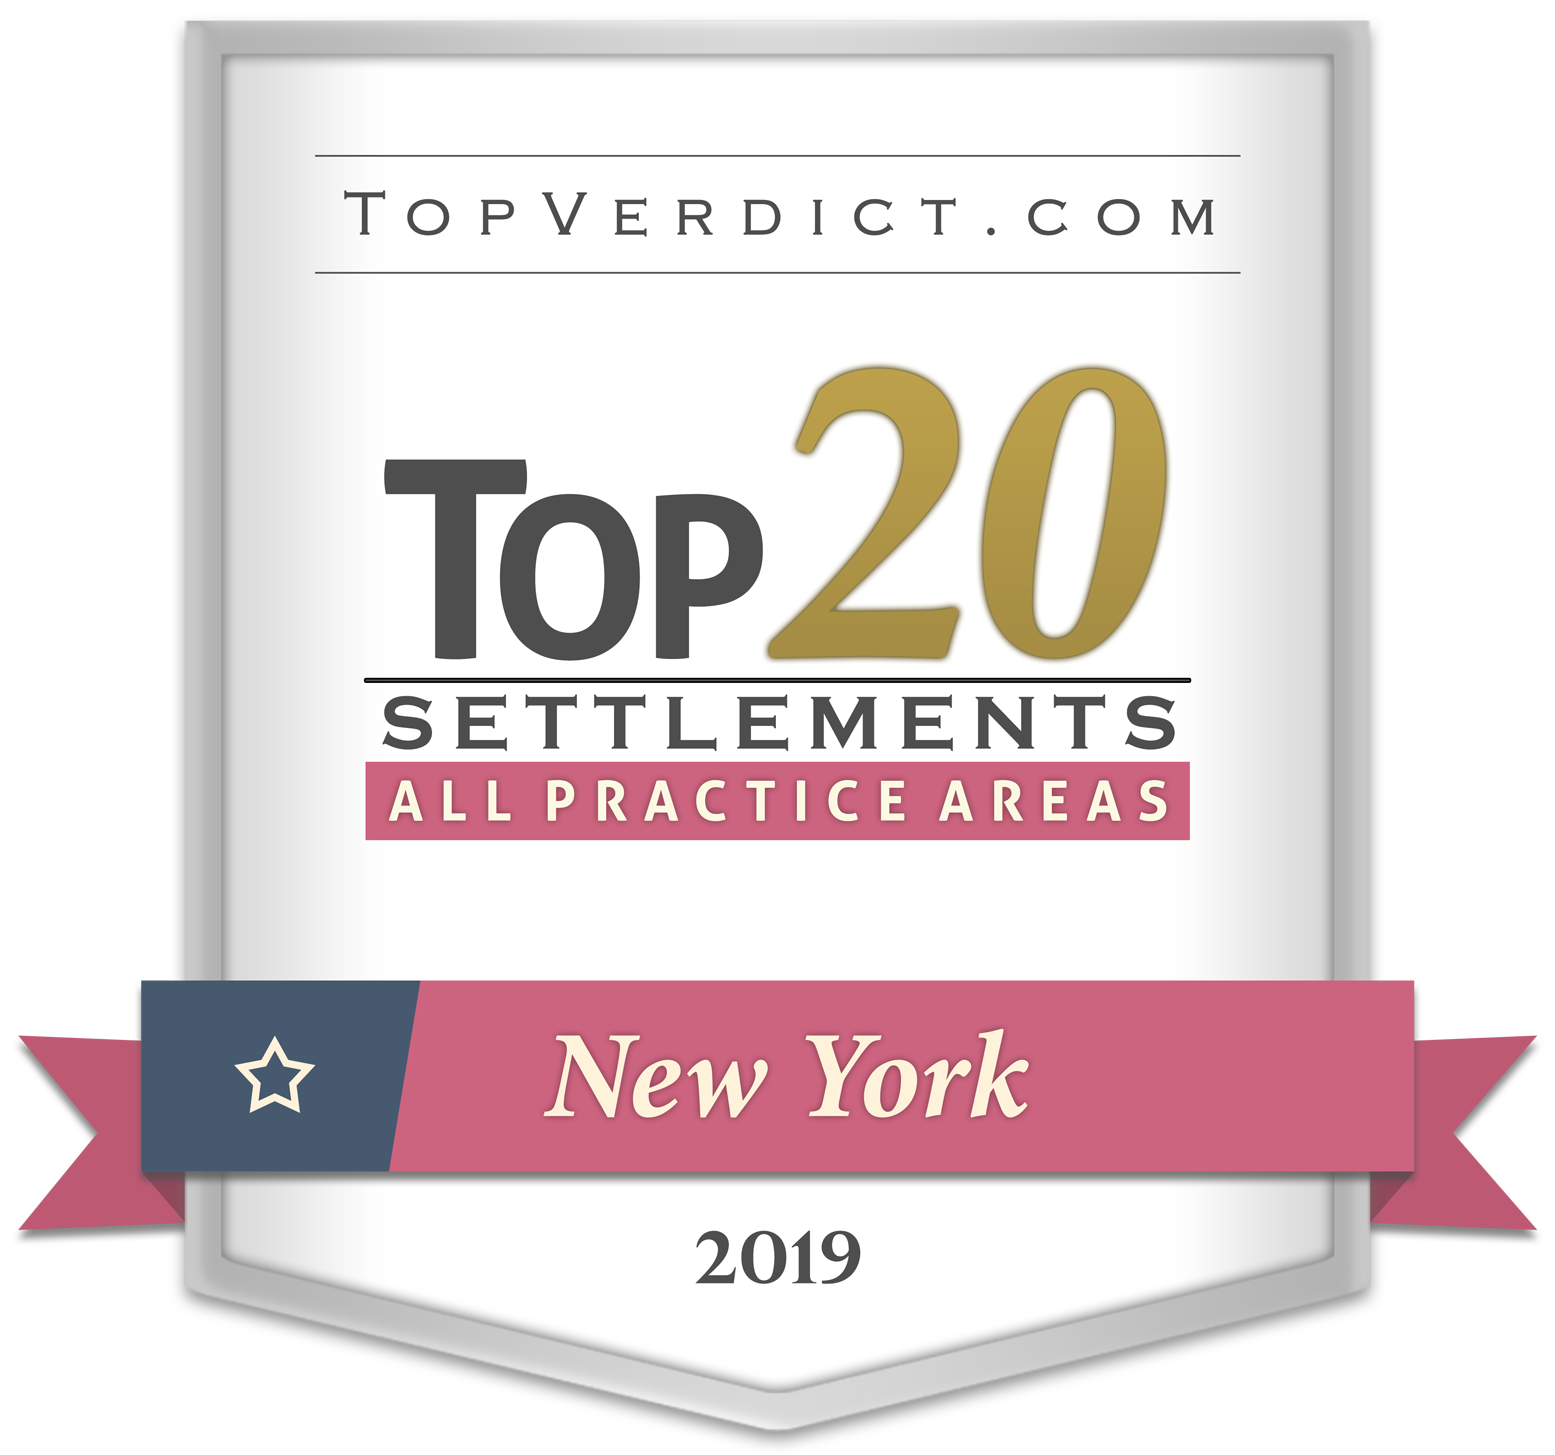 Top 20 Settlements Badge